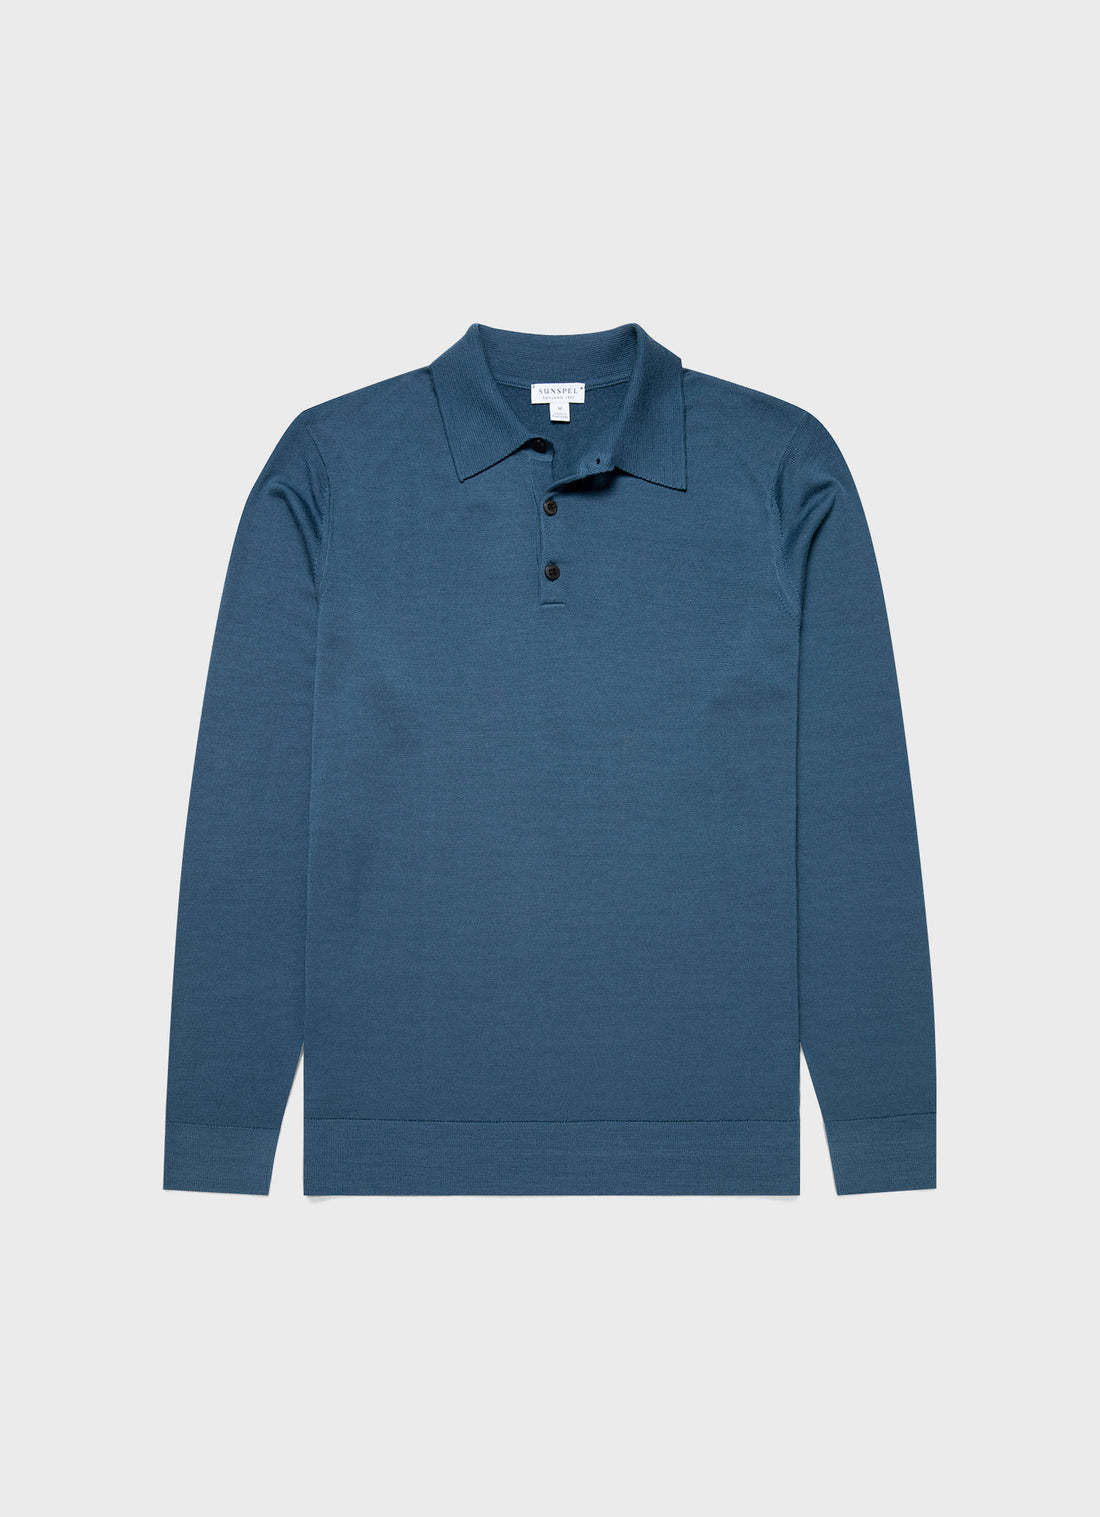 Men's Extra-Fine Merino Polo Shirt in Teal